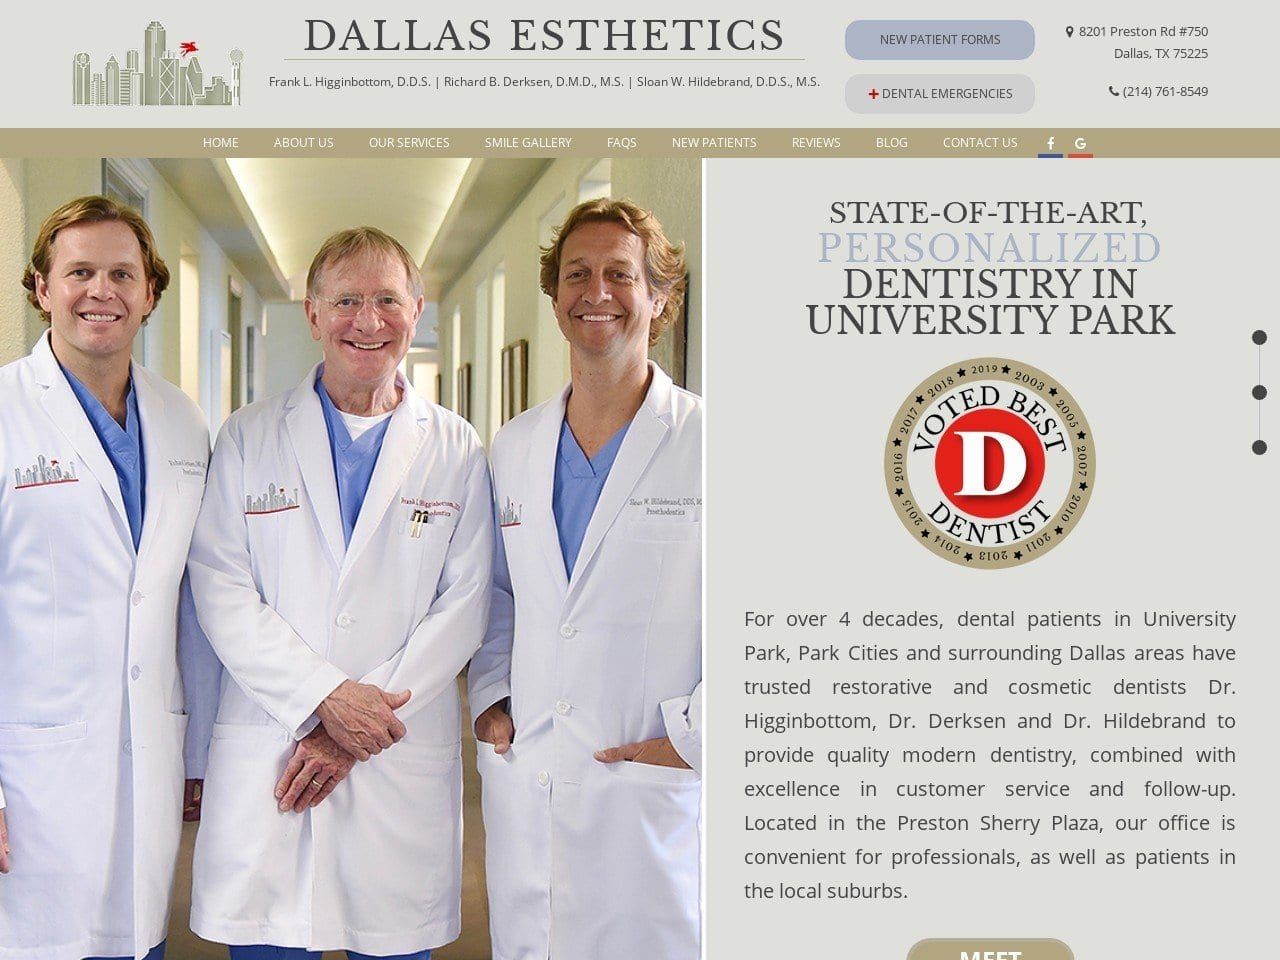 Dallas Esthetics Website Screenshot from dallasesthetics.com